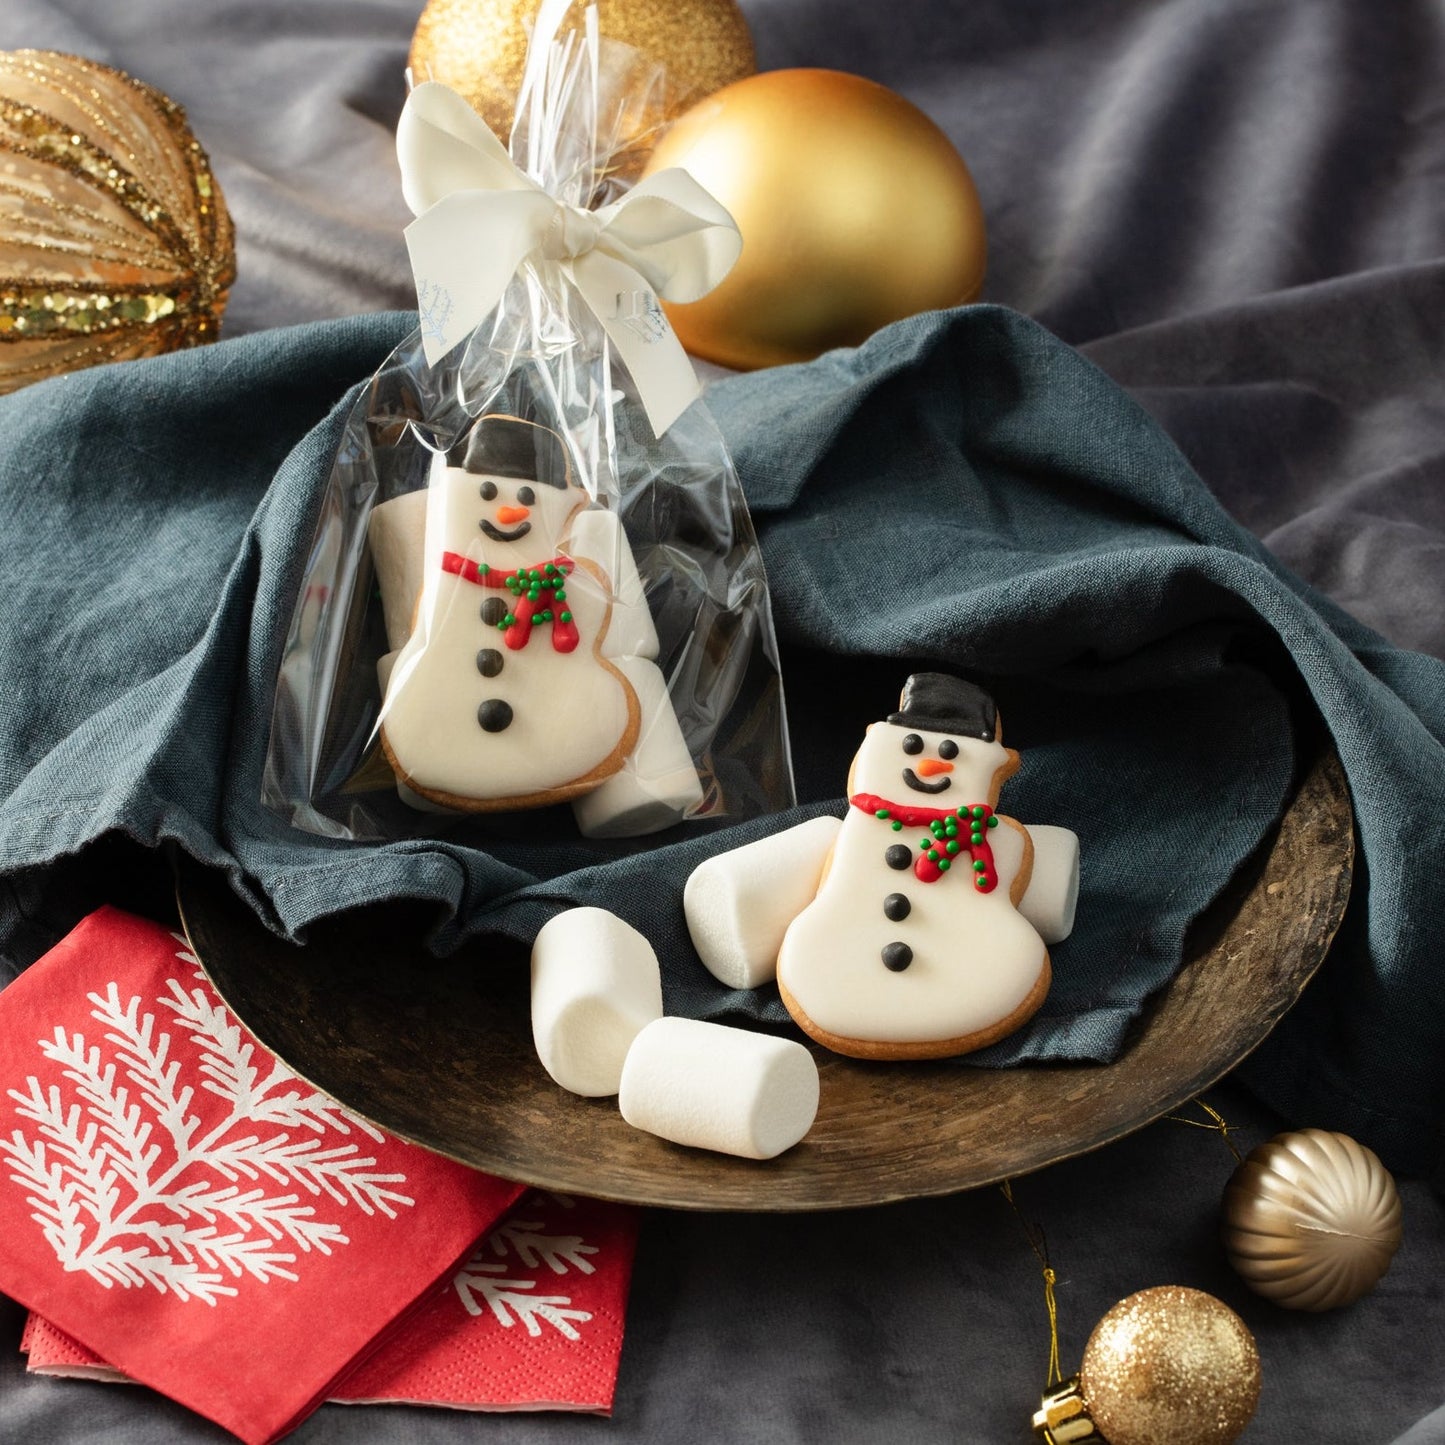 Snowman Icing Cookies with Marshmallows (1 pc) 雪人棉花糖糖霜曲奇 (1件)